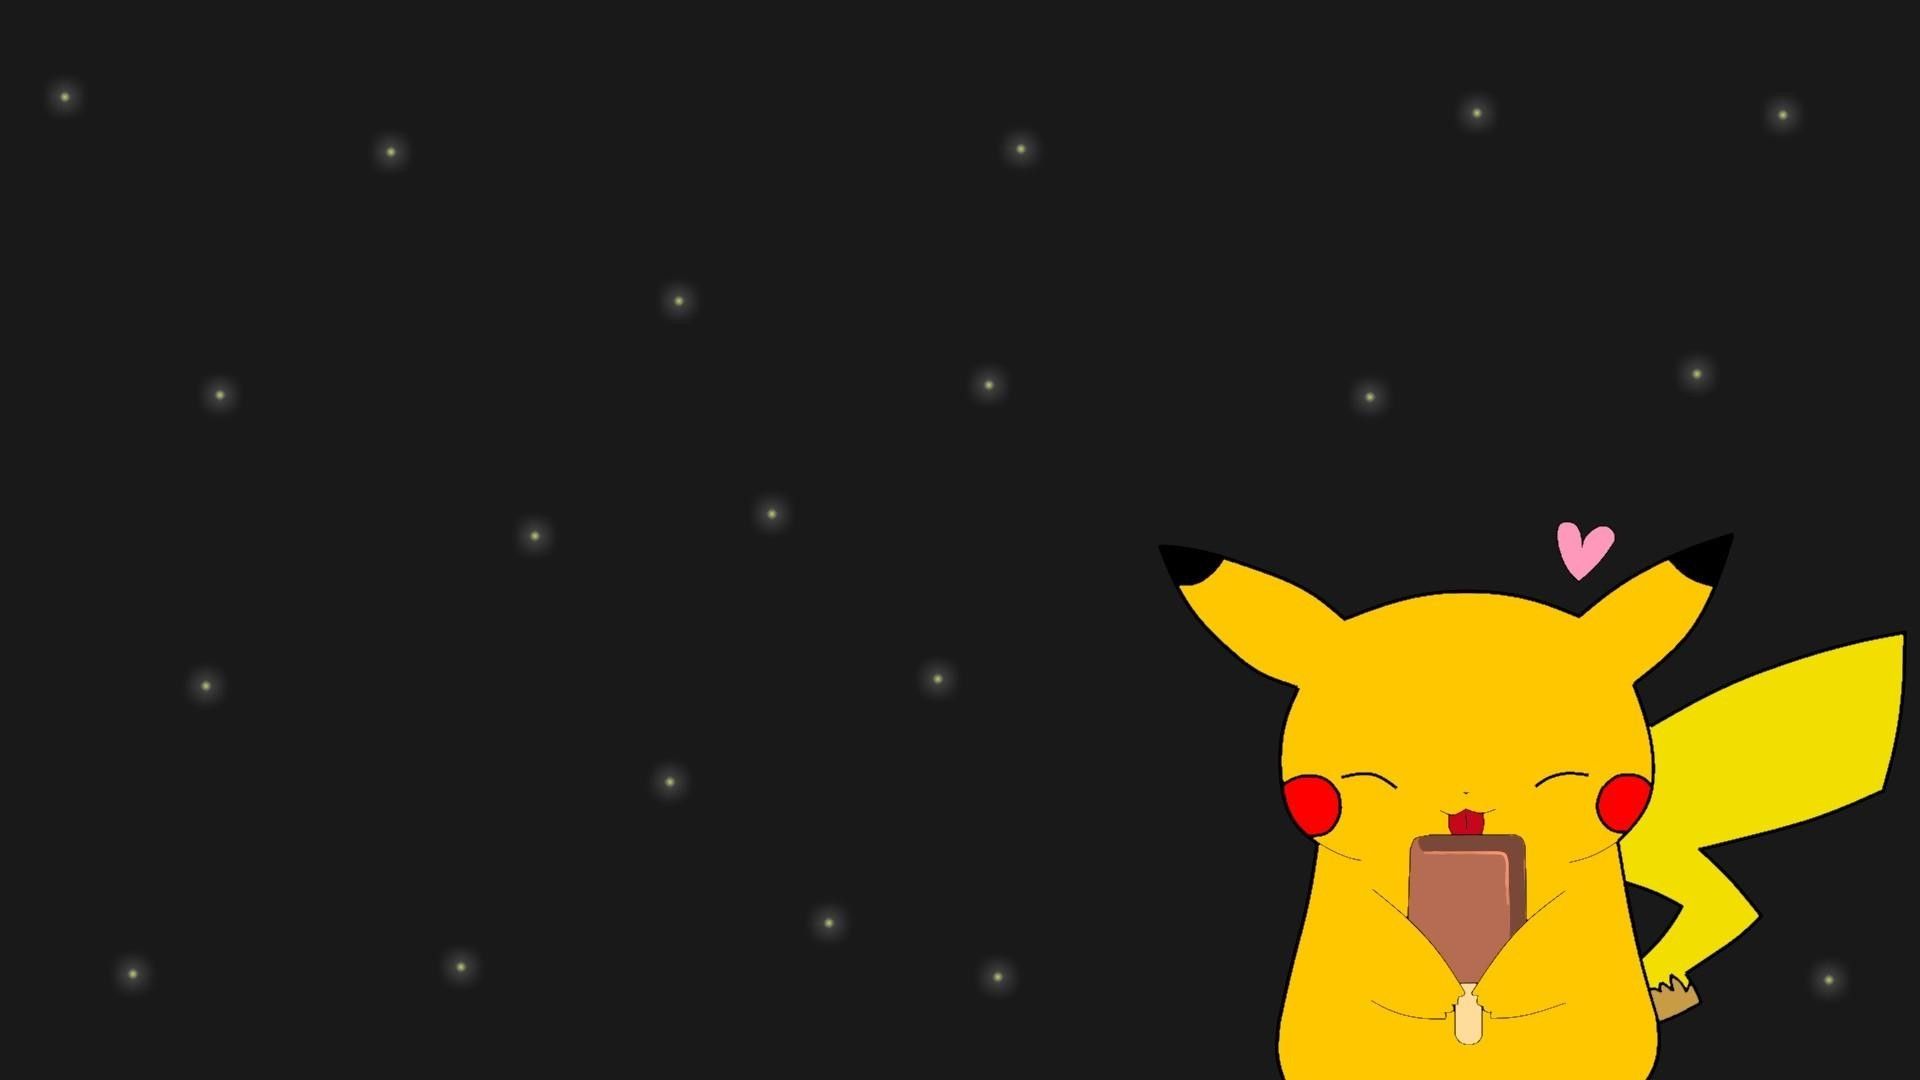 Wallpaper background of a cute pikachu eating an ice cream - Pikachu